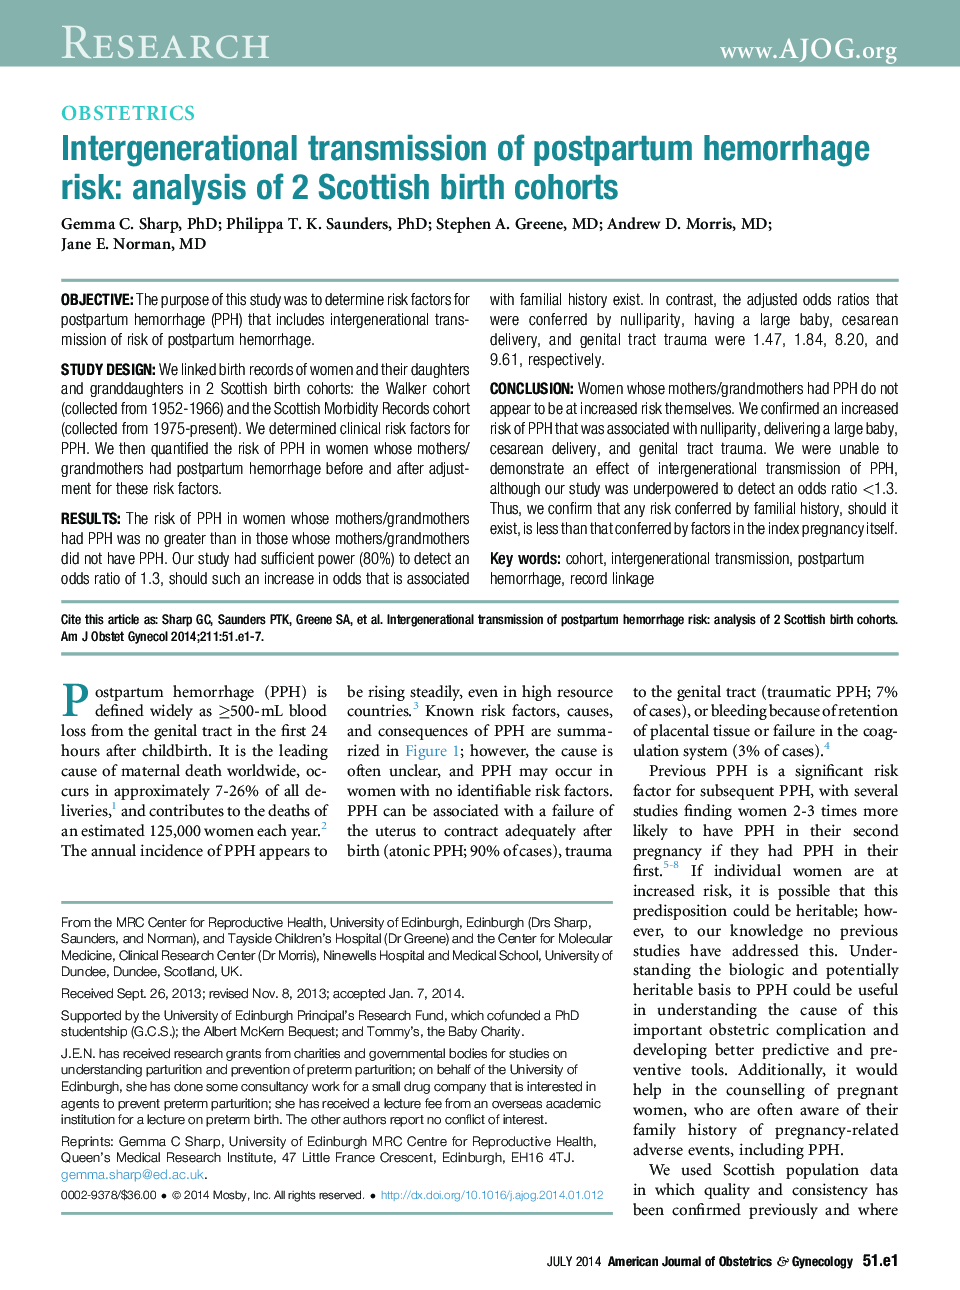 Intergenerational transmission of postpartum hemorrhage risk: analysis of 2 Scottish birth cohorts